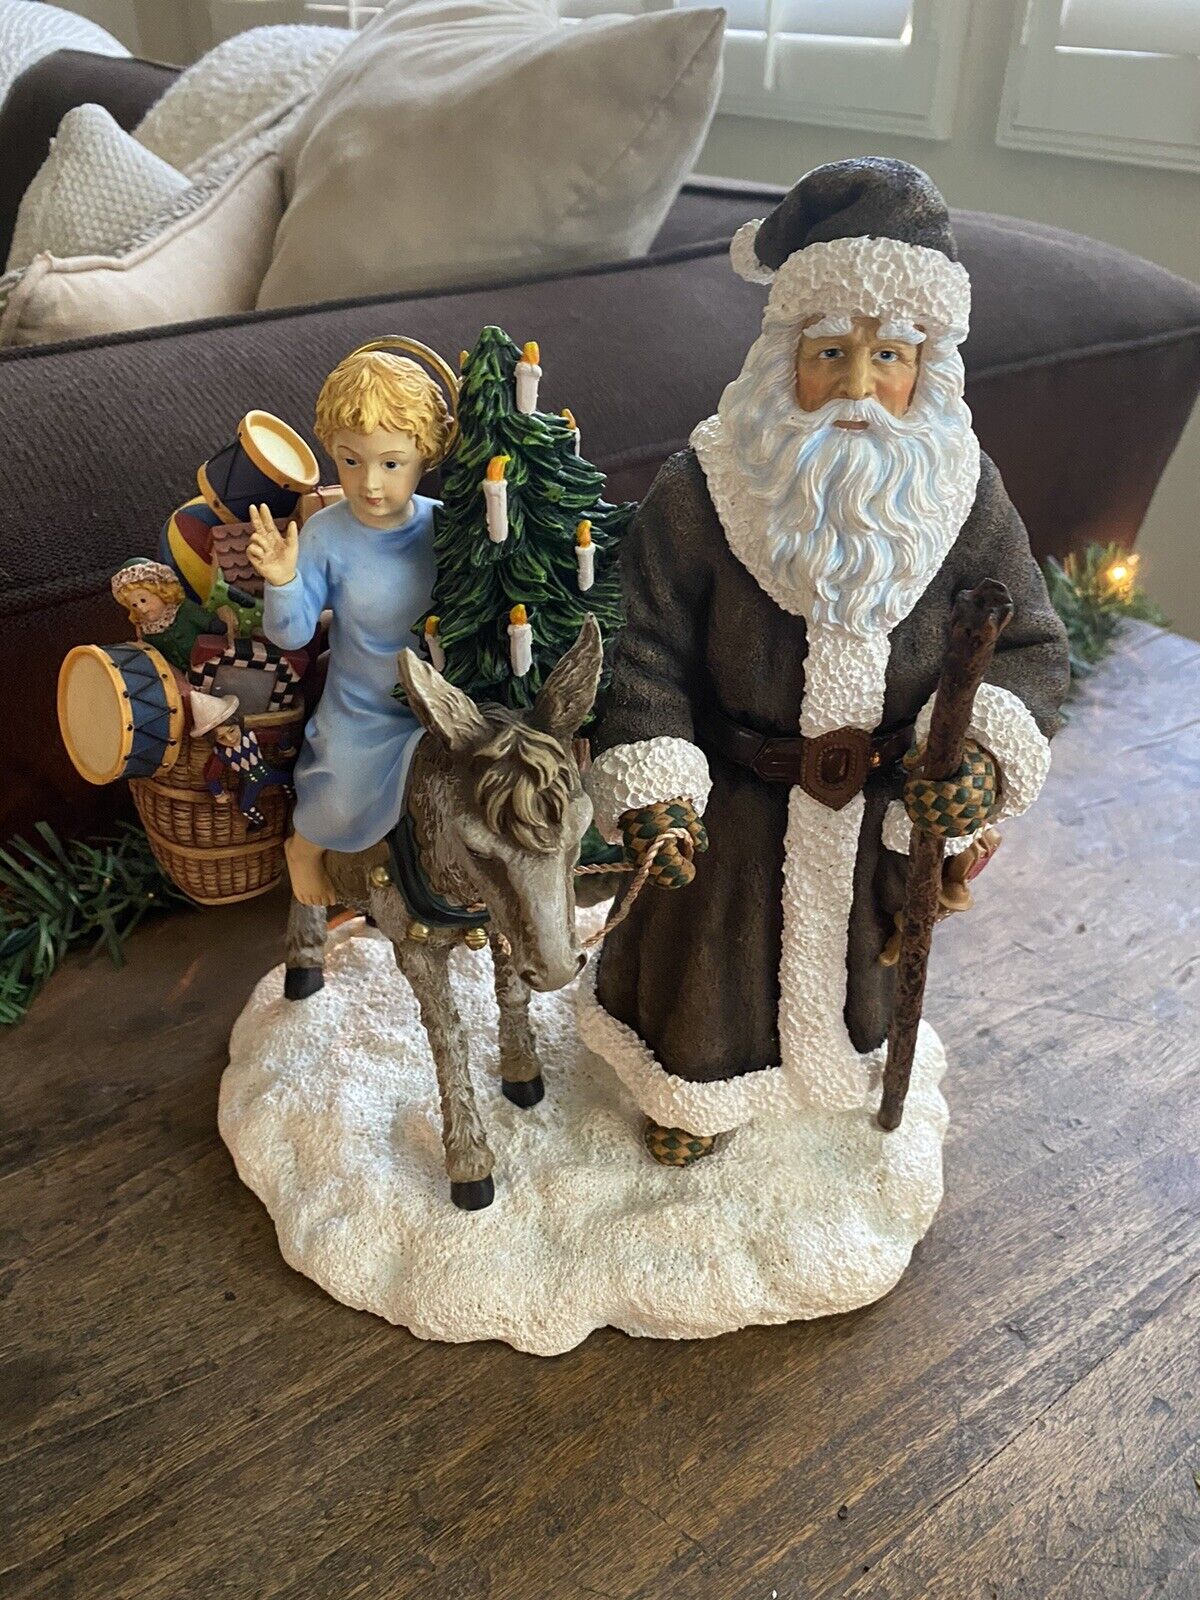 Pipka Memories Of Christmas Figurine Saint Nicholas And The Christkind large